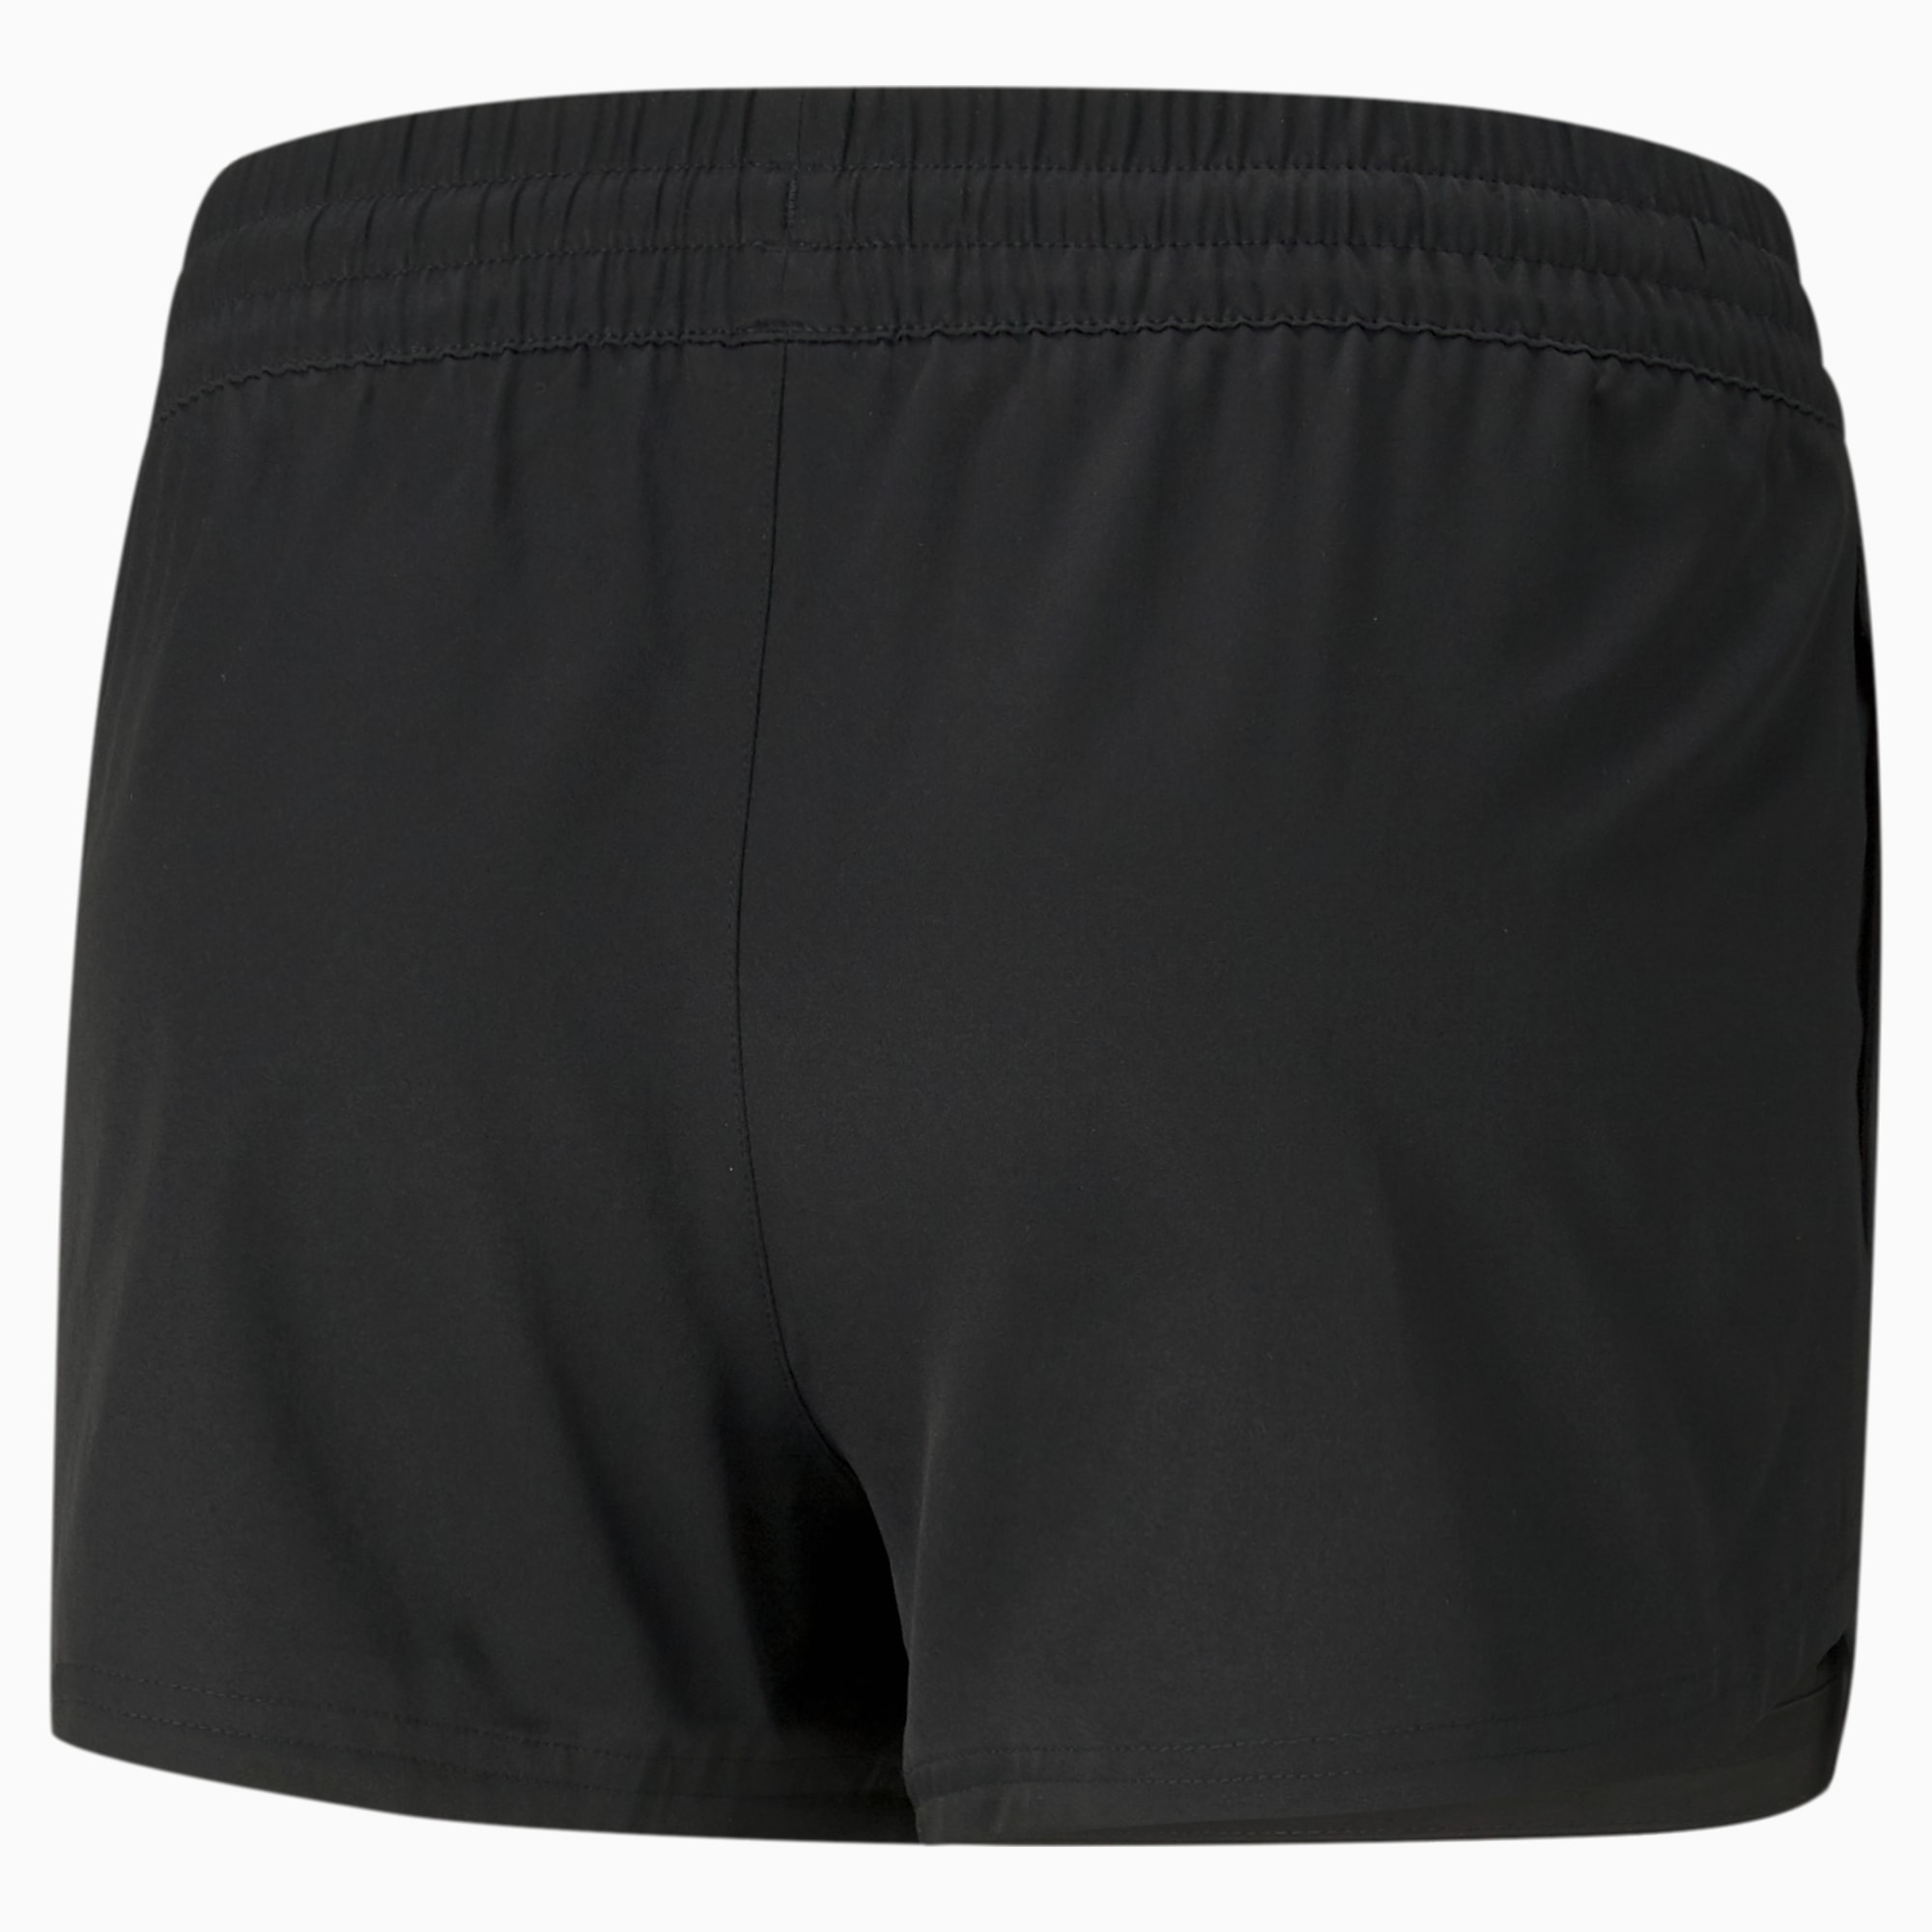 PUMA Performance Woven 3 Women's Training Shorts, Black, Size S, Clothing